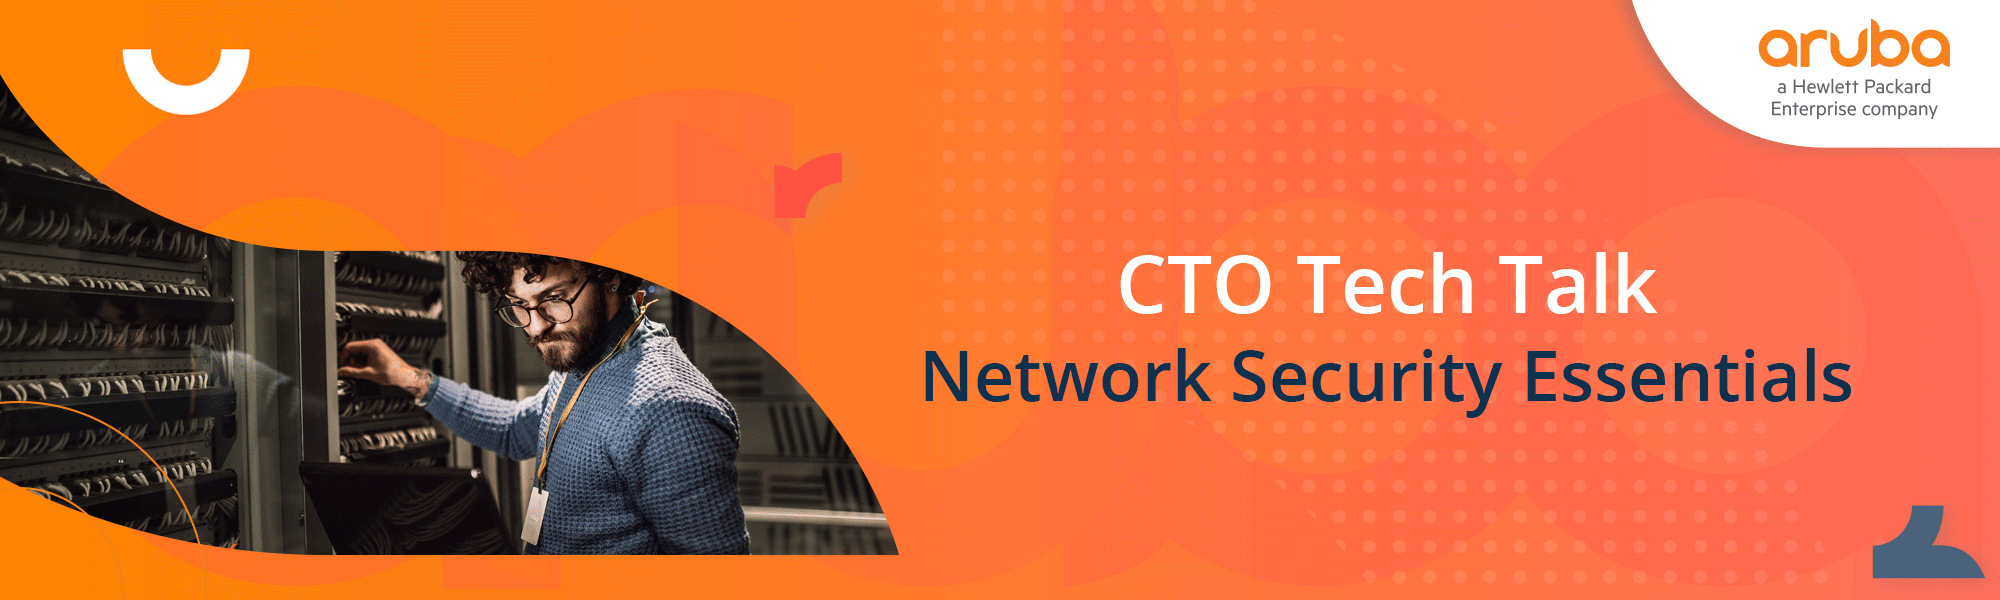 CTO Tech Talk: Network Security Essentials